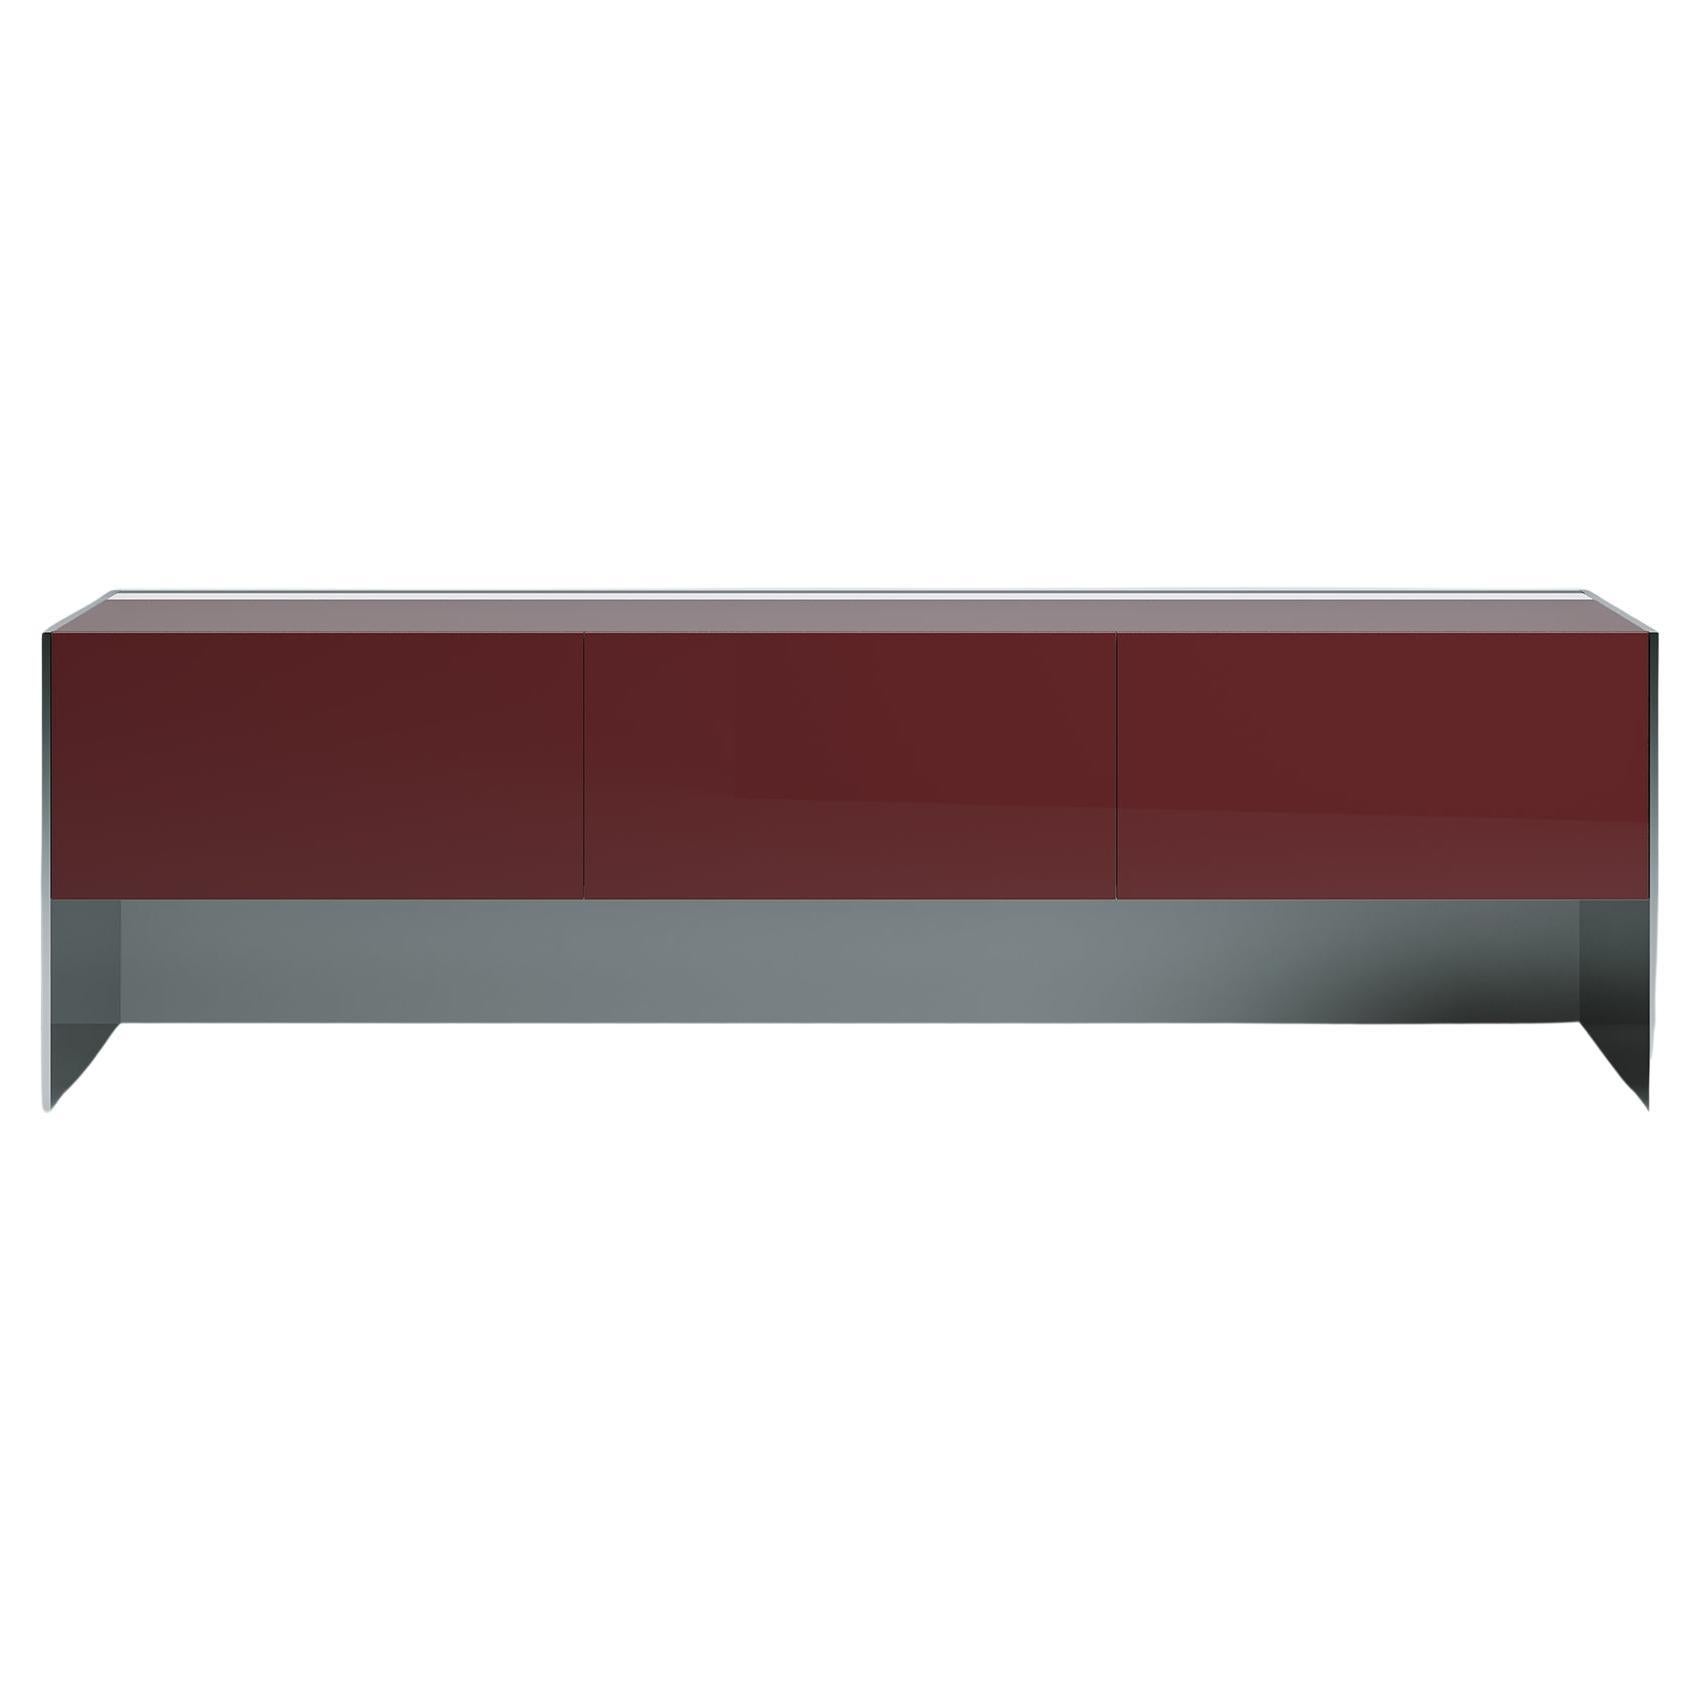 Acerbis Steel Sideboard in Glossy Lacquered Burgundy Top & Doors w Steel Sides